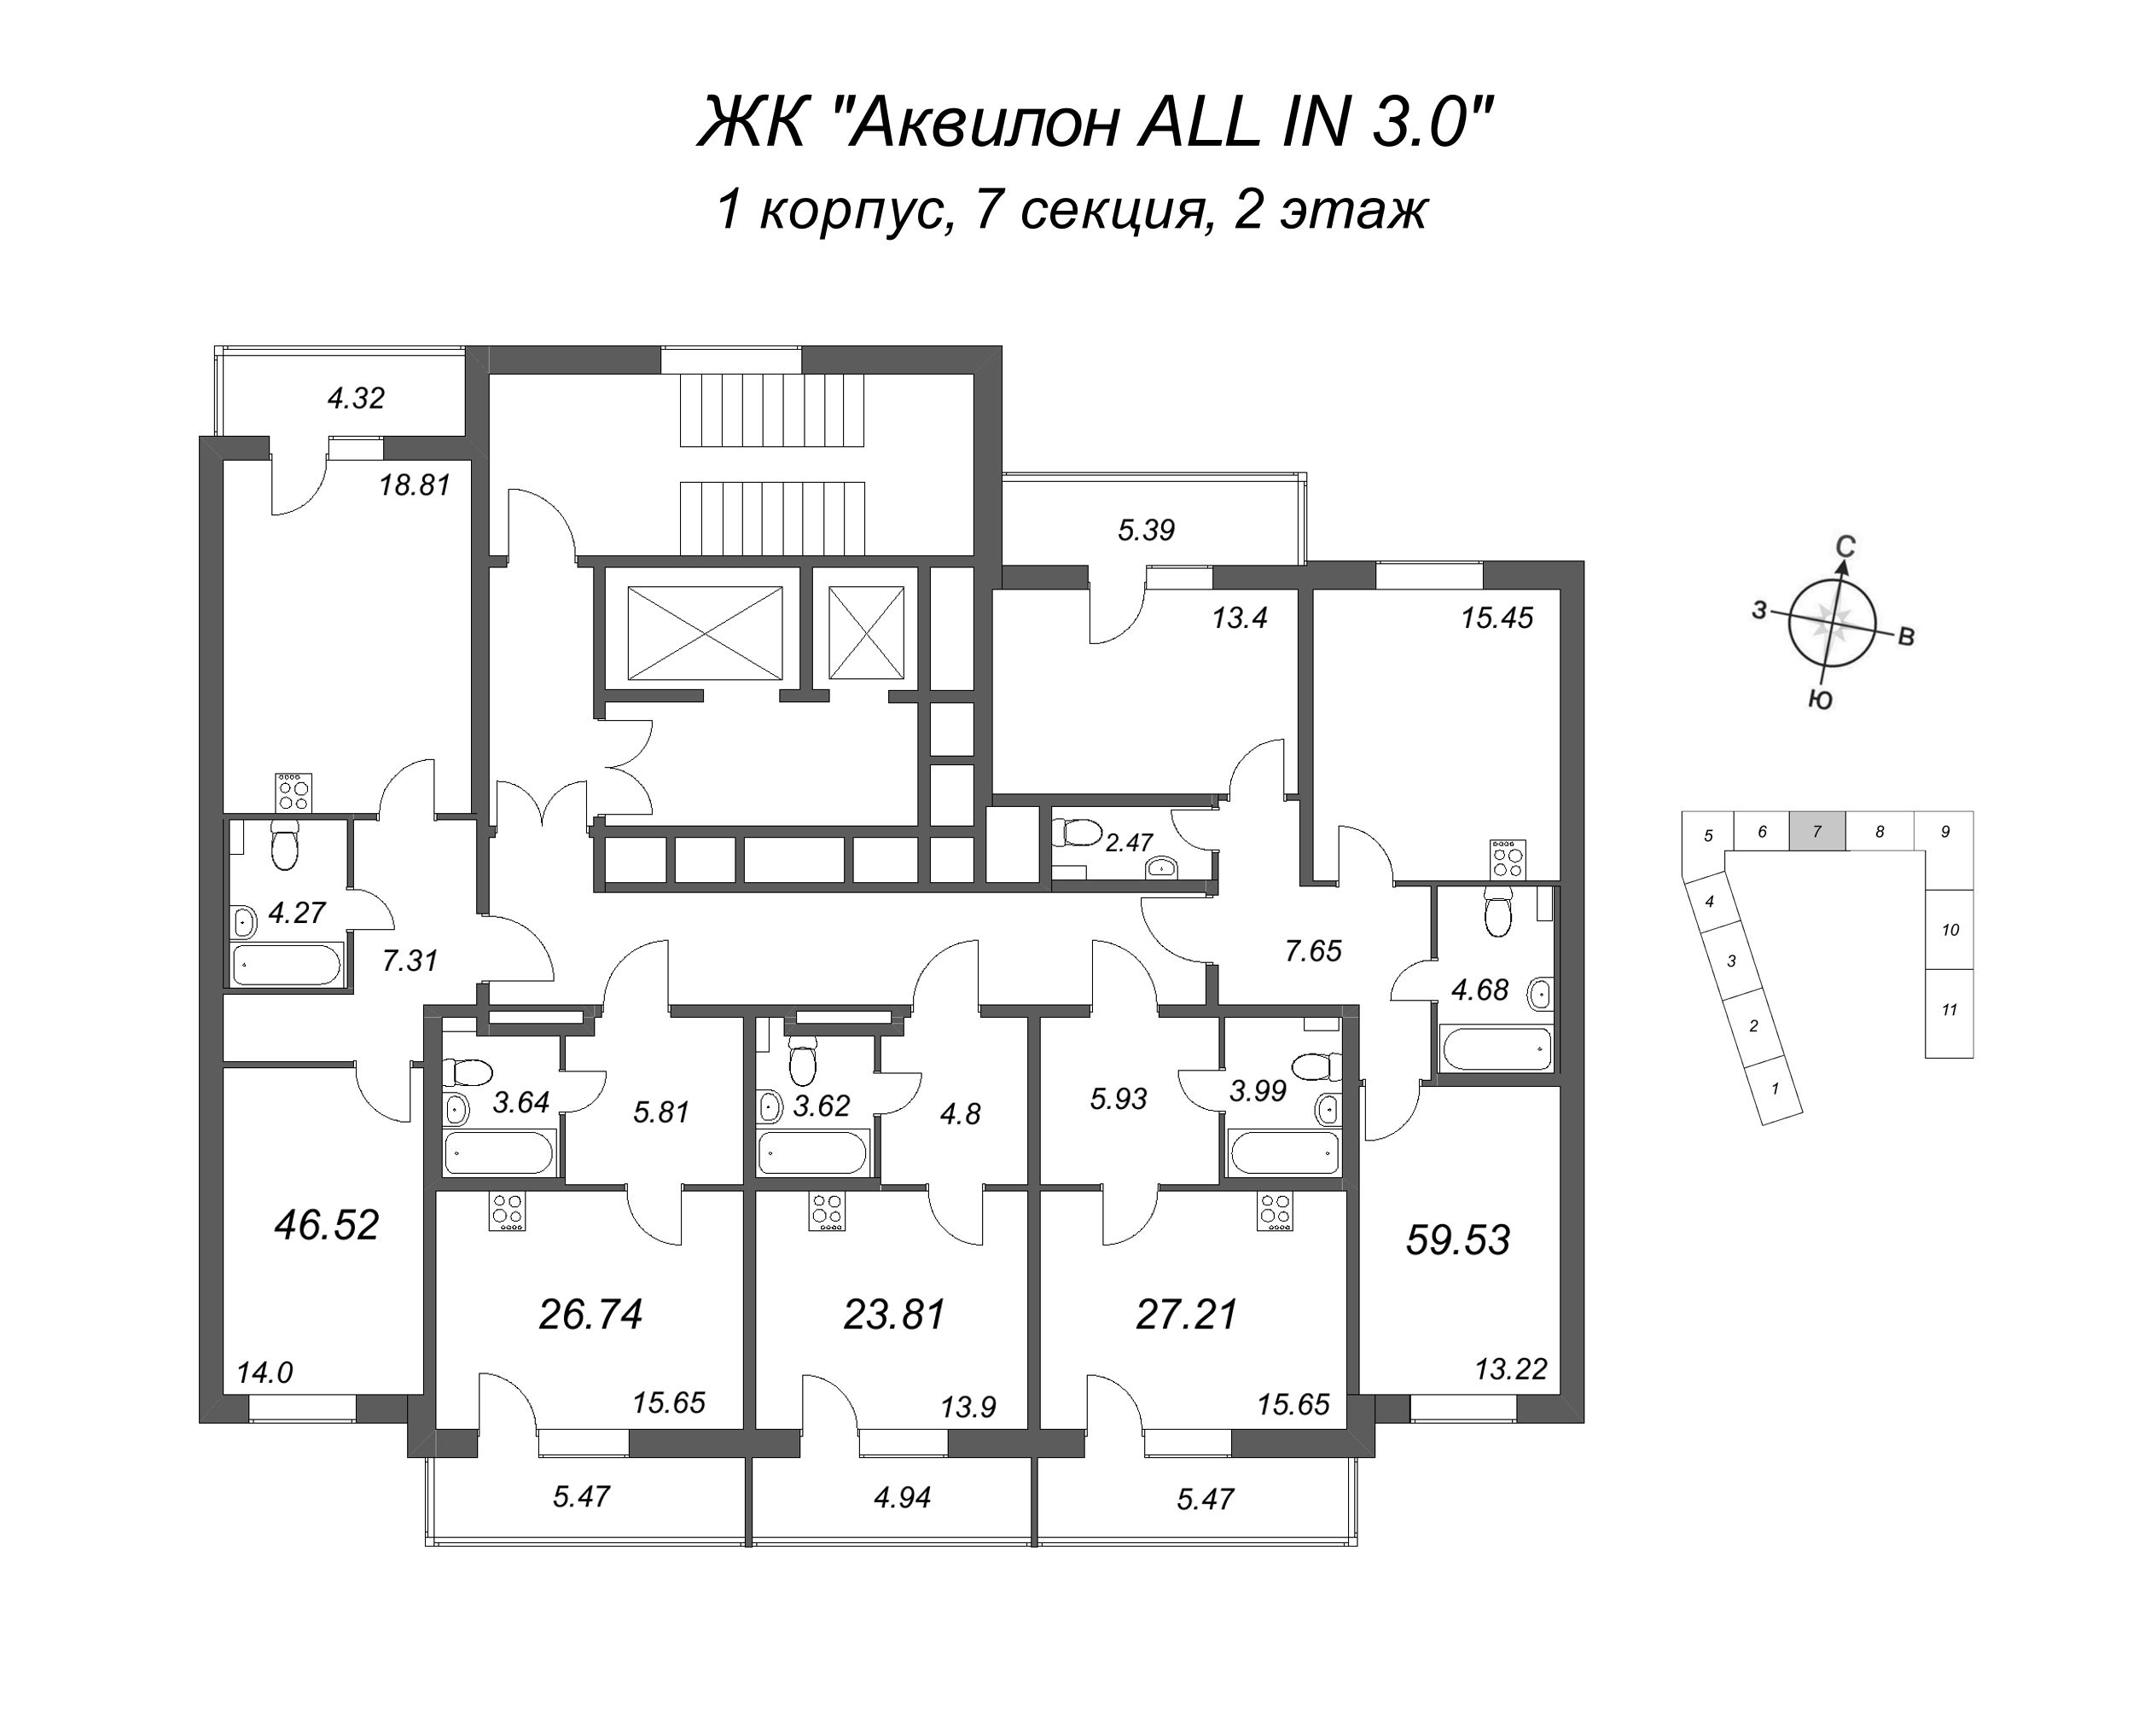 3-комнатная (Евро) квартира, 59.53 м² - планировка этажа